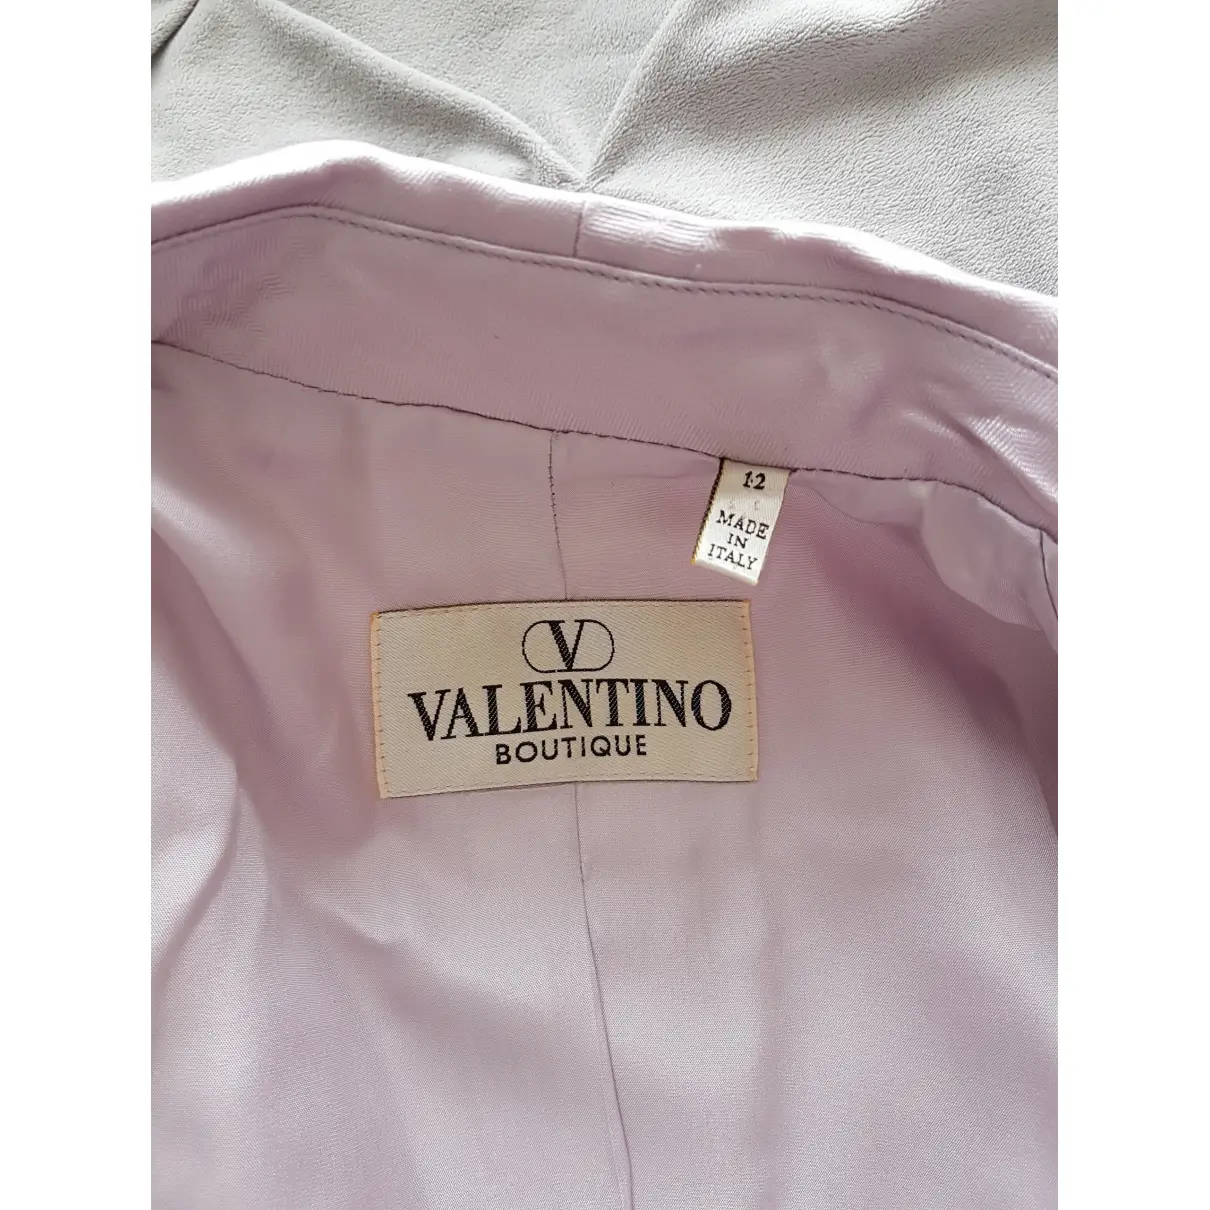 Buy Valentino Garavani Silk suit jacket online - Vintage